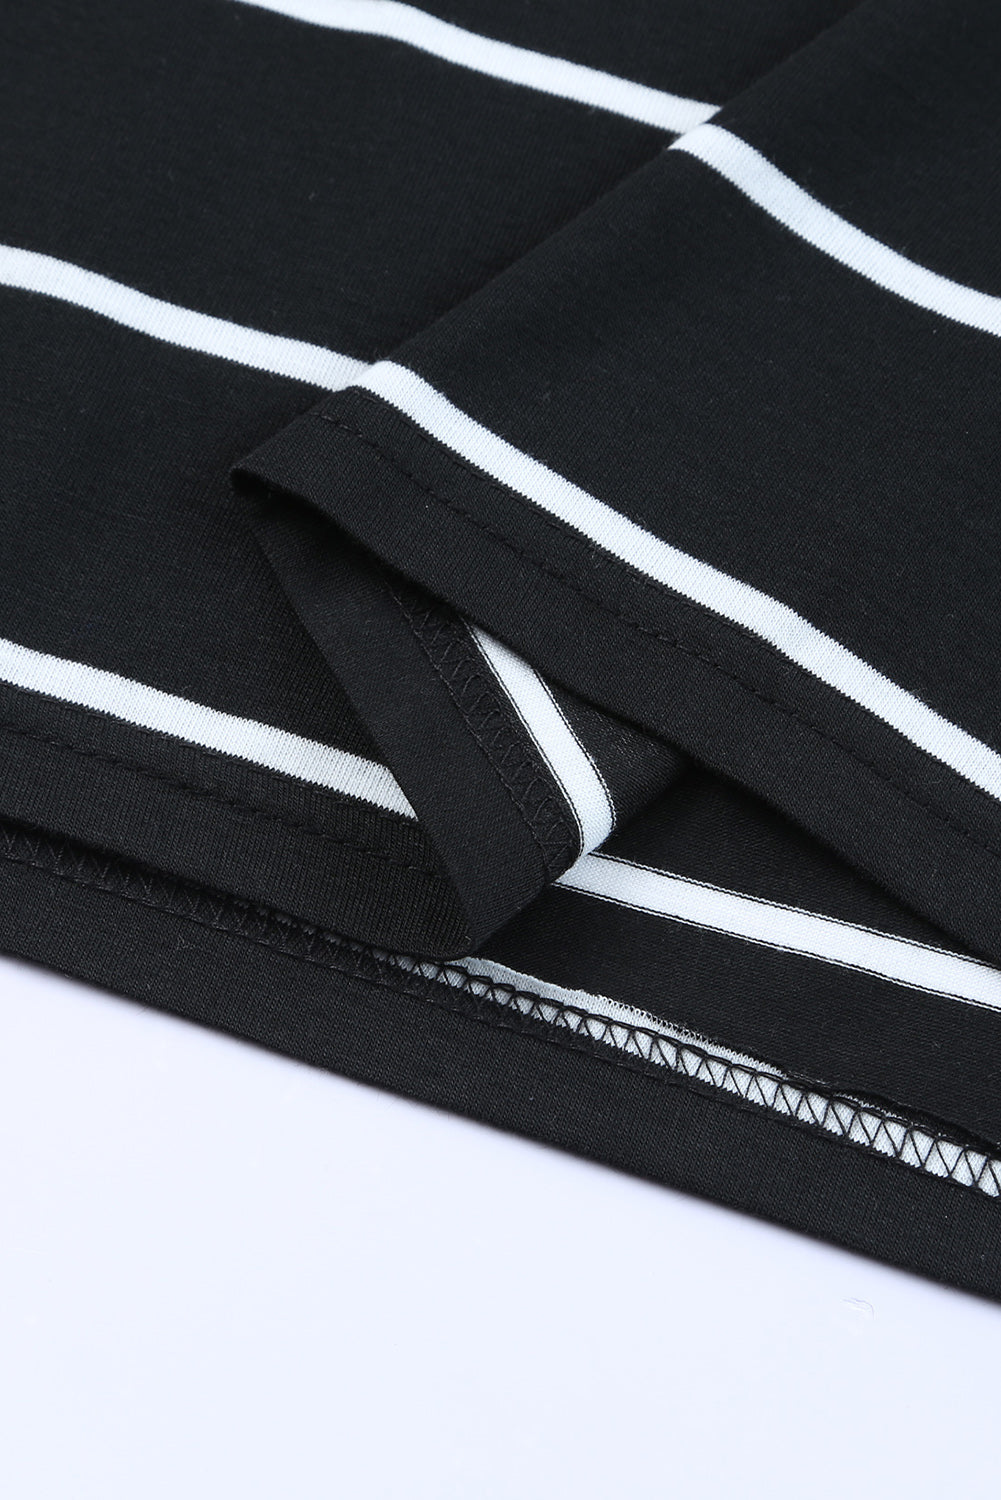 Black Stripe Print Open Back Sleeveless Maxi Dress With Slits